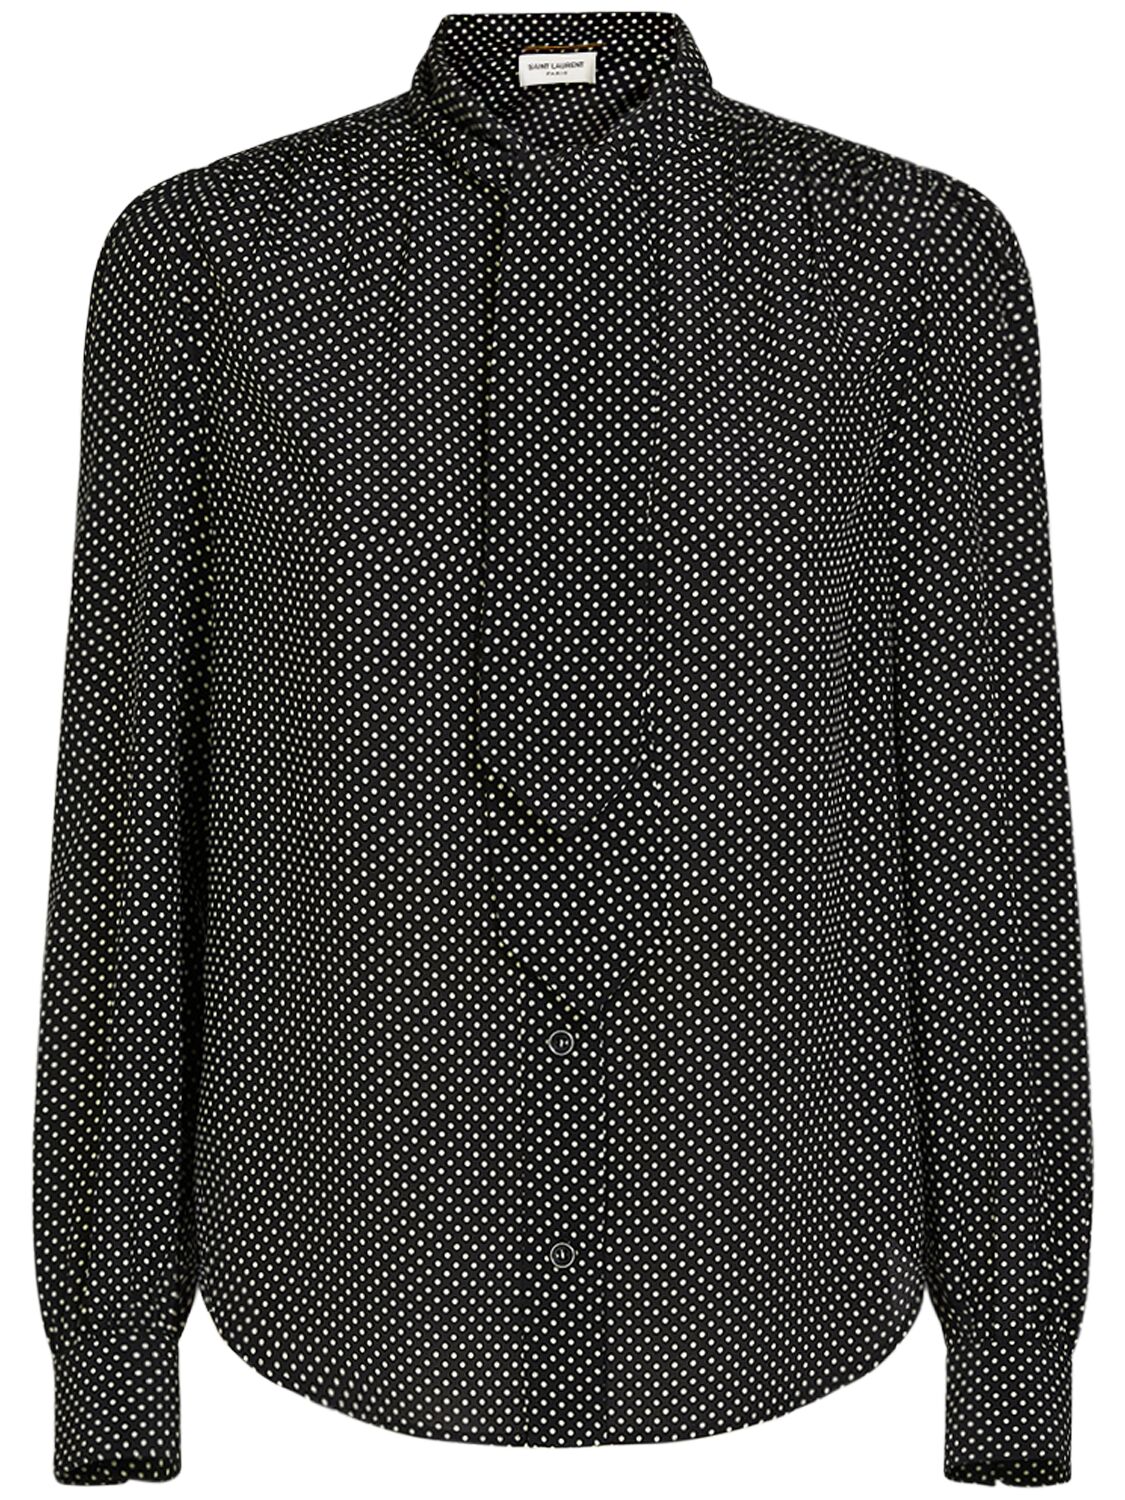 Saint Laurent Silk Shirt W/ Tie In Black